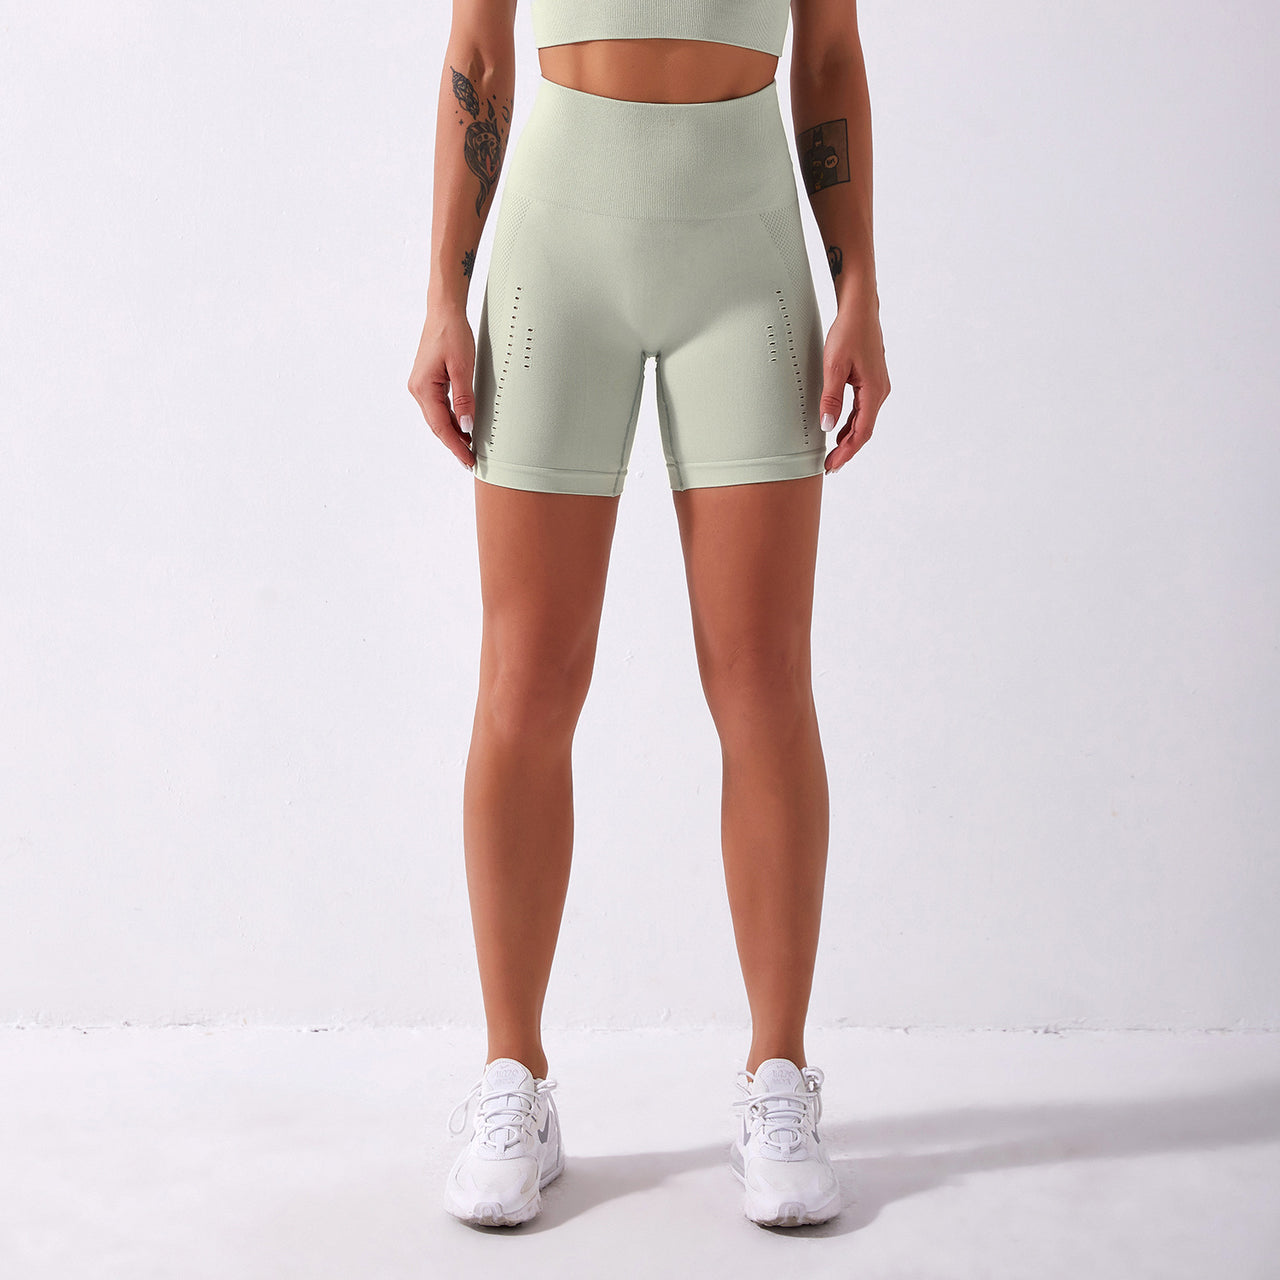 PureComfort Yoga Shorts